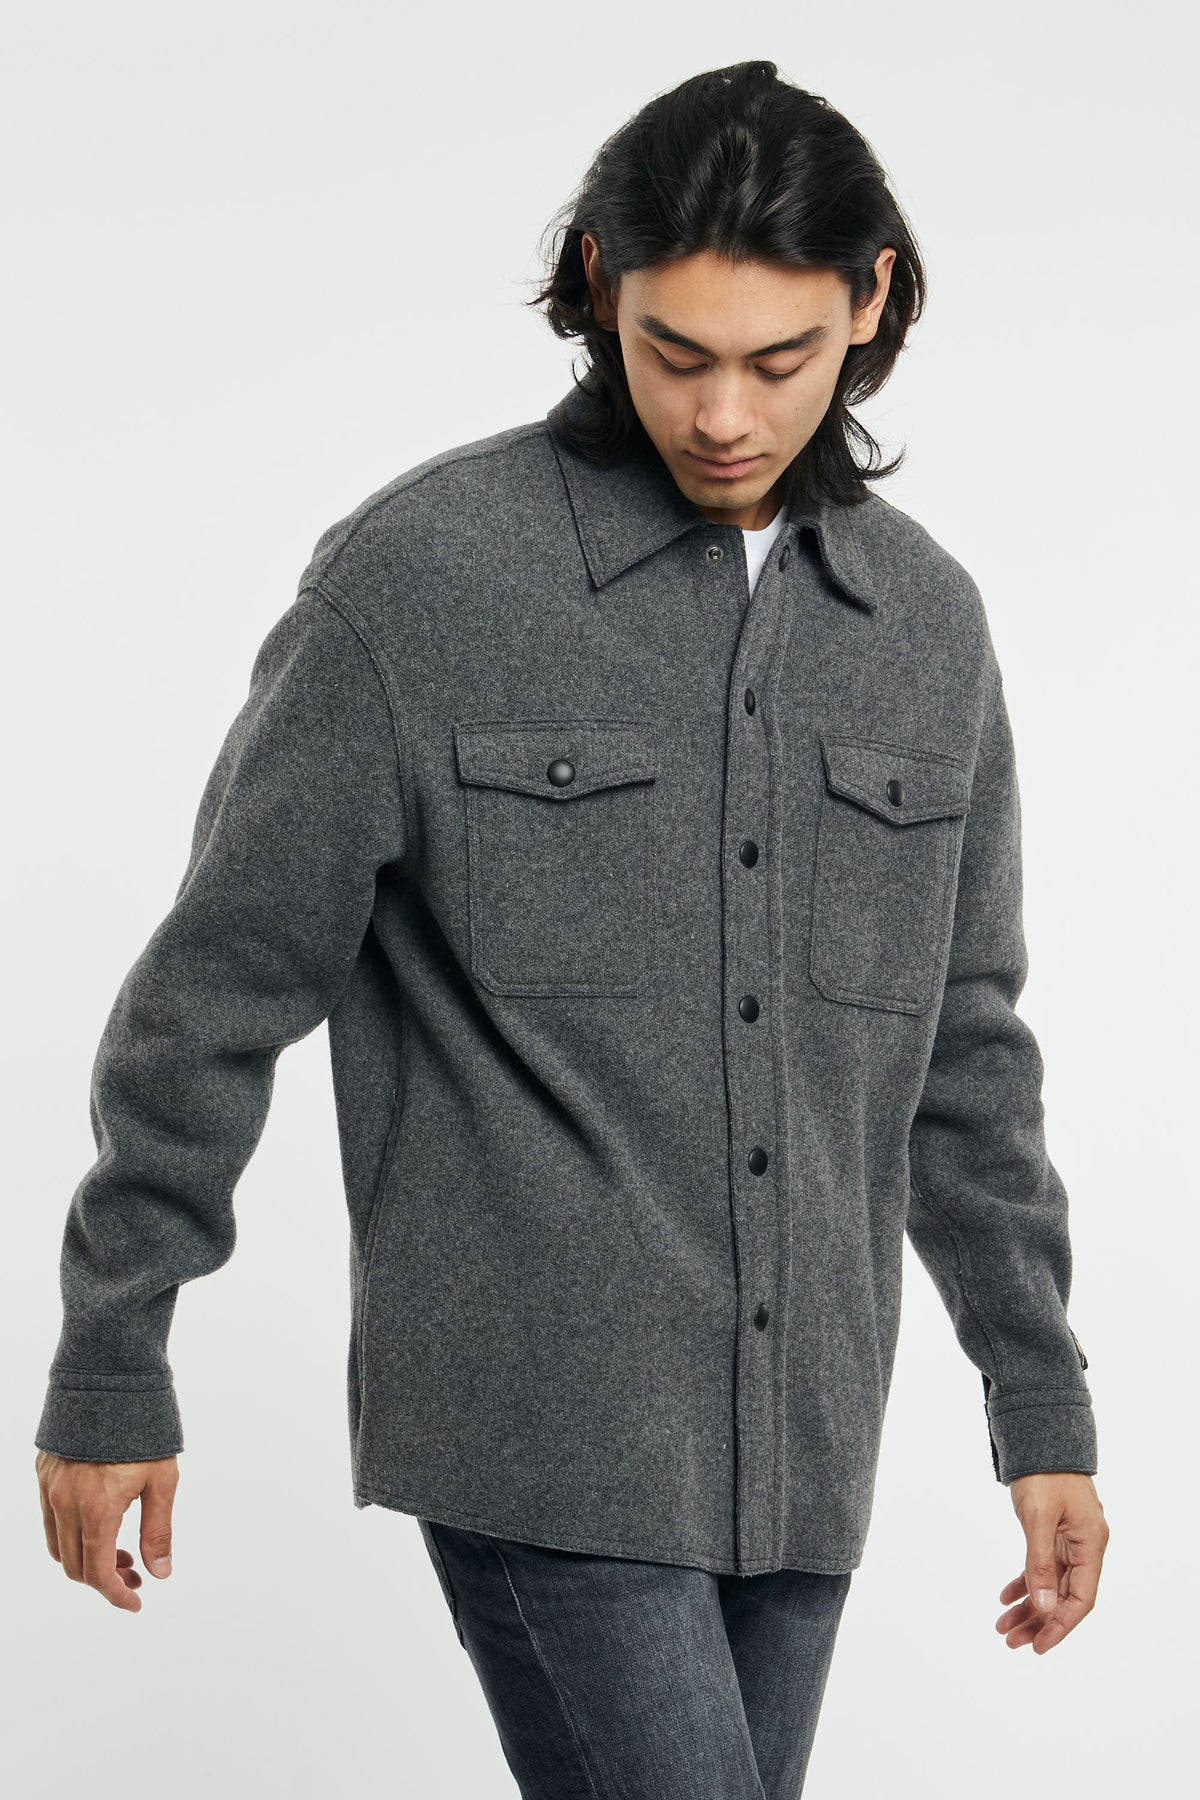 N°21 Grey Wool Blend Overshirt